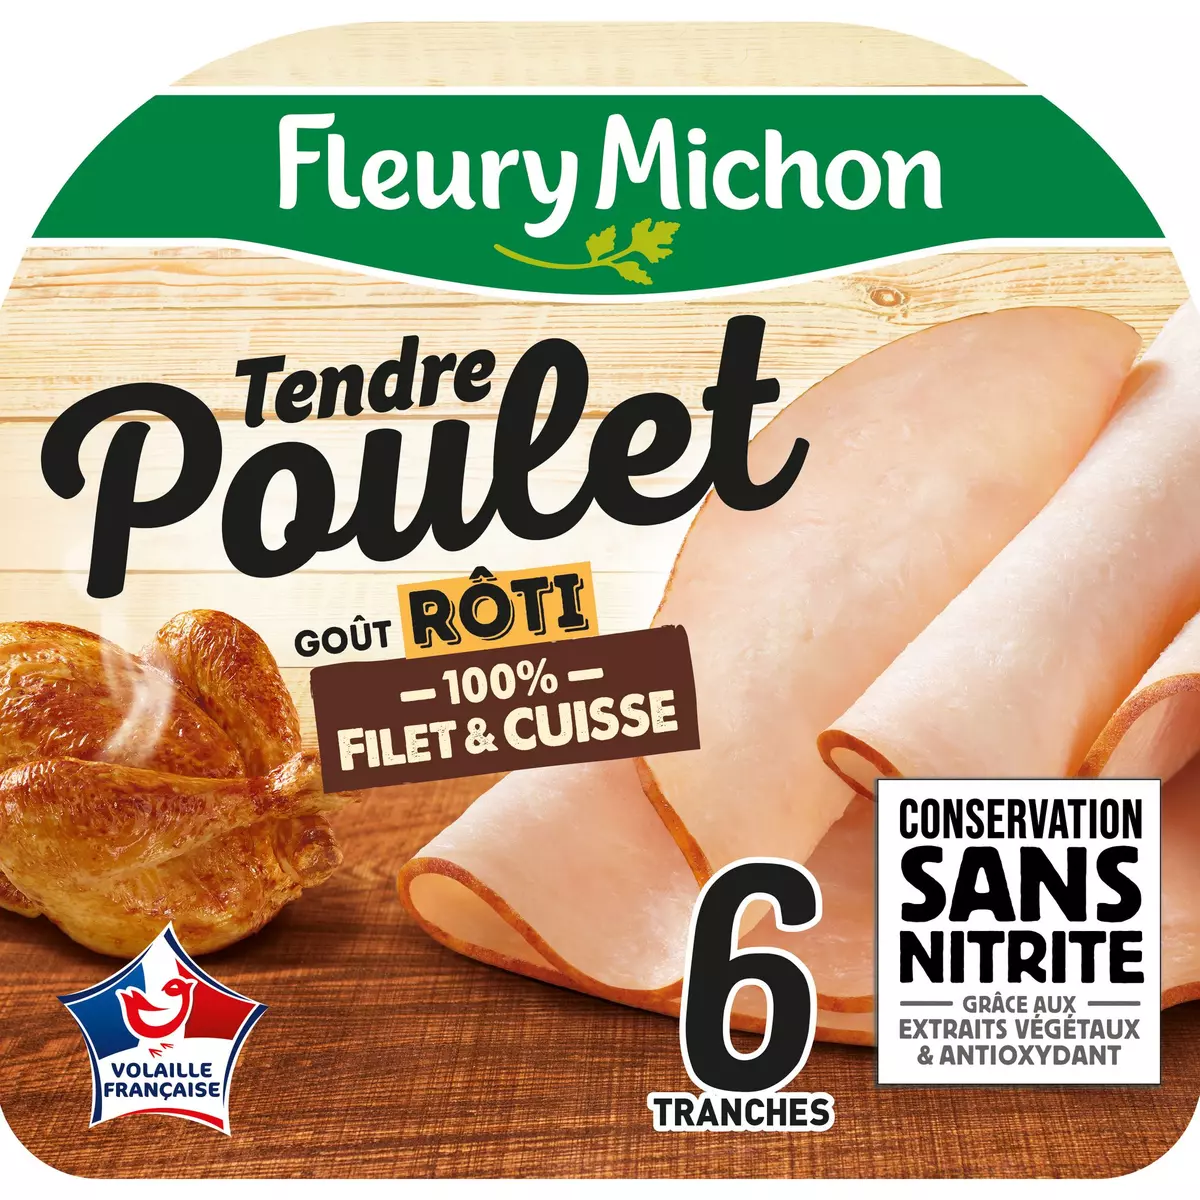 FLEURY MICHON Tendre poulet goût rôti sans nitrite 6 tranches 195g